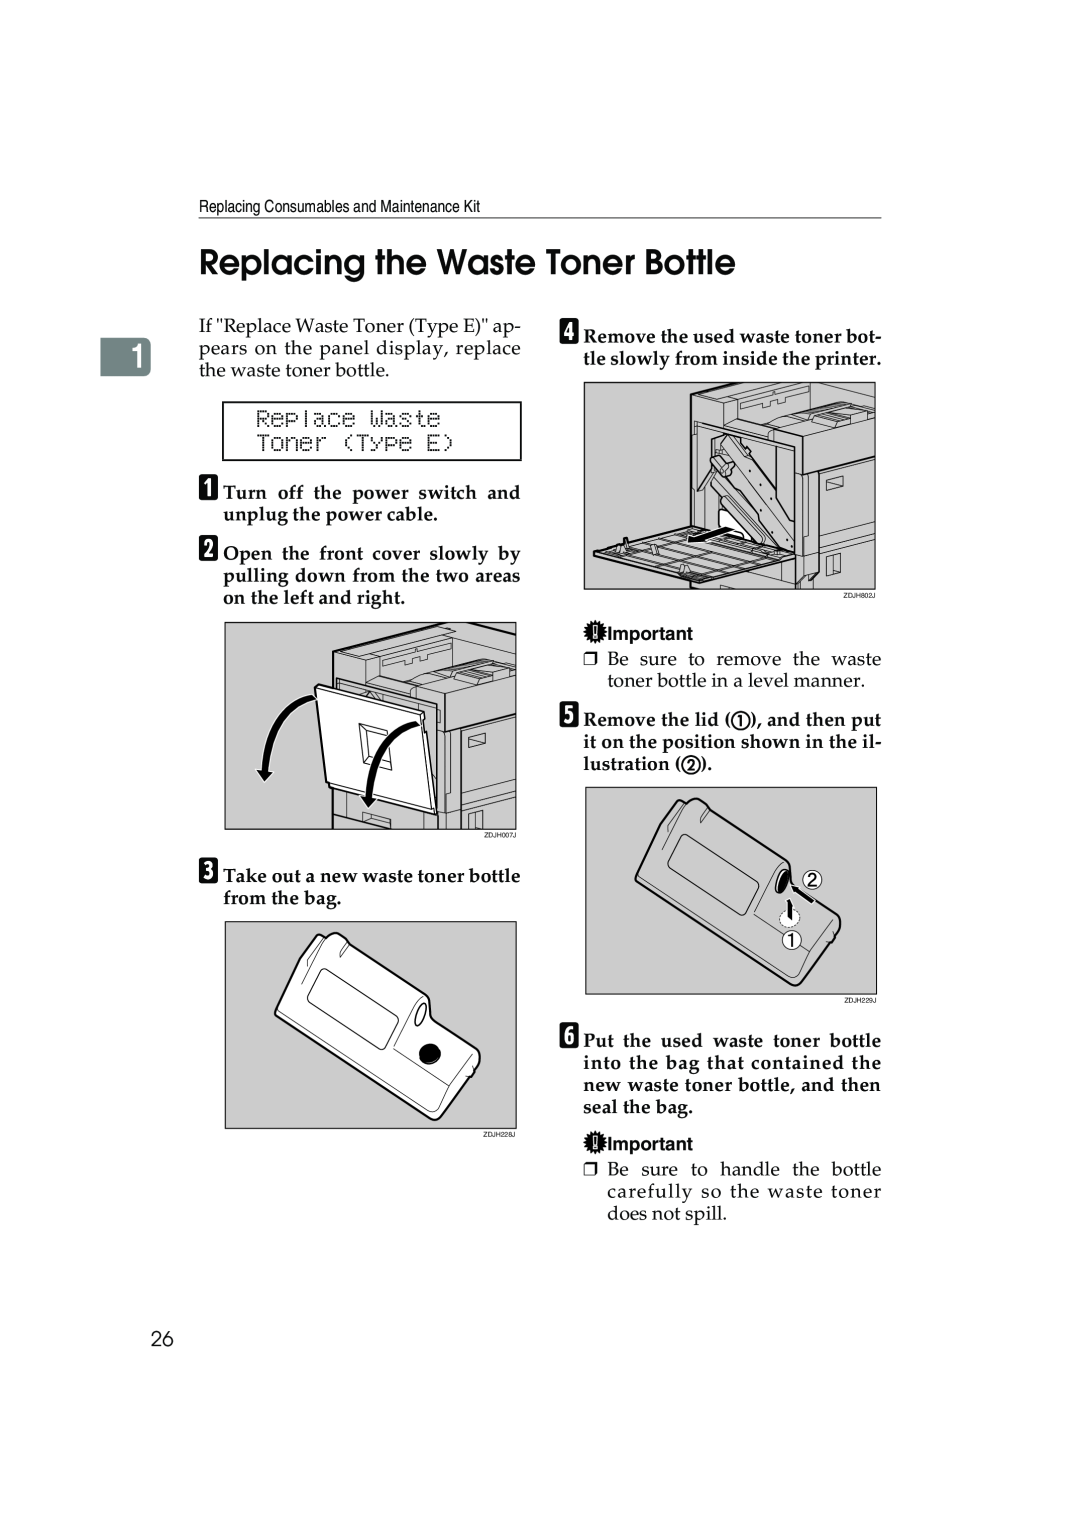 Ricoh AP3800C operating instructions Replacing the Waste Toner Bottle, Replace Waste Toner Type E 